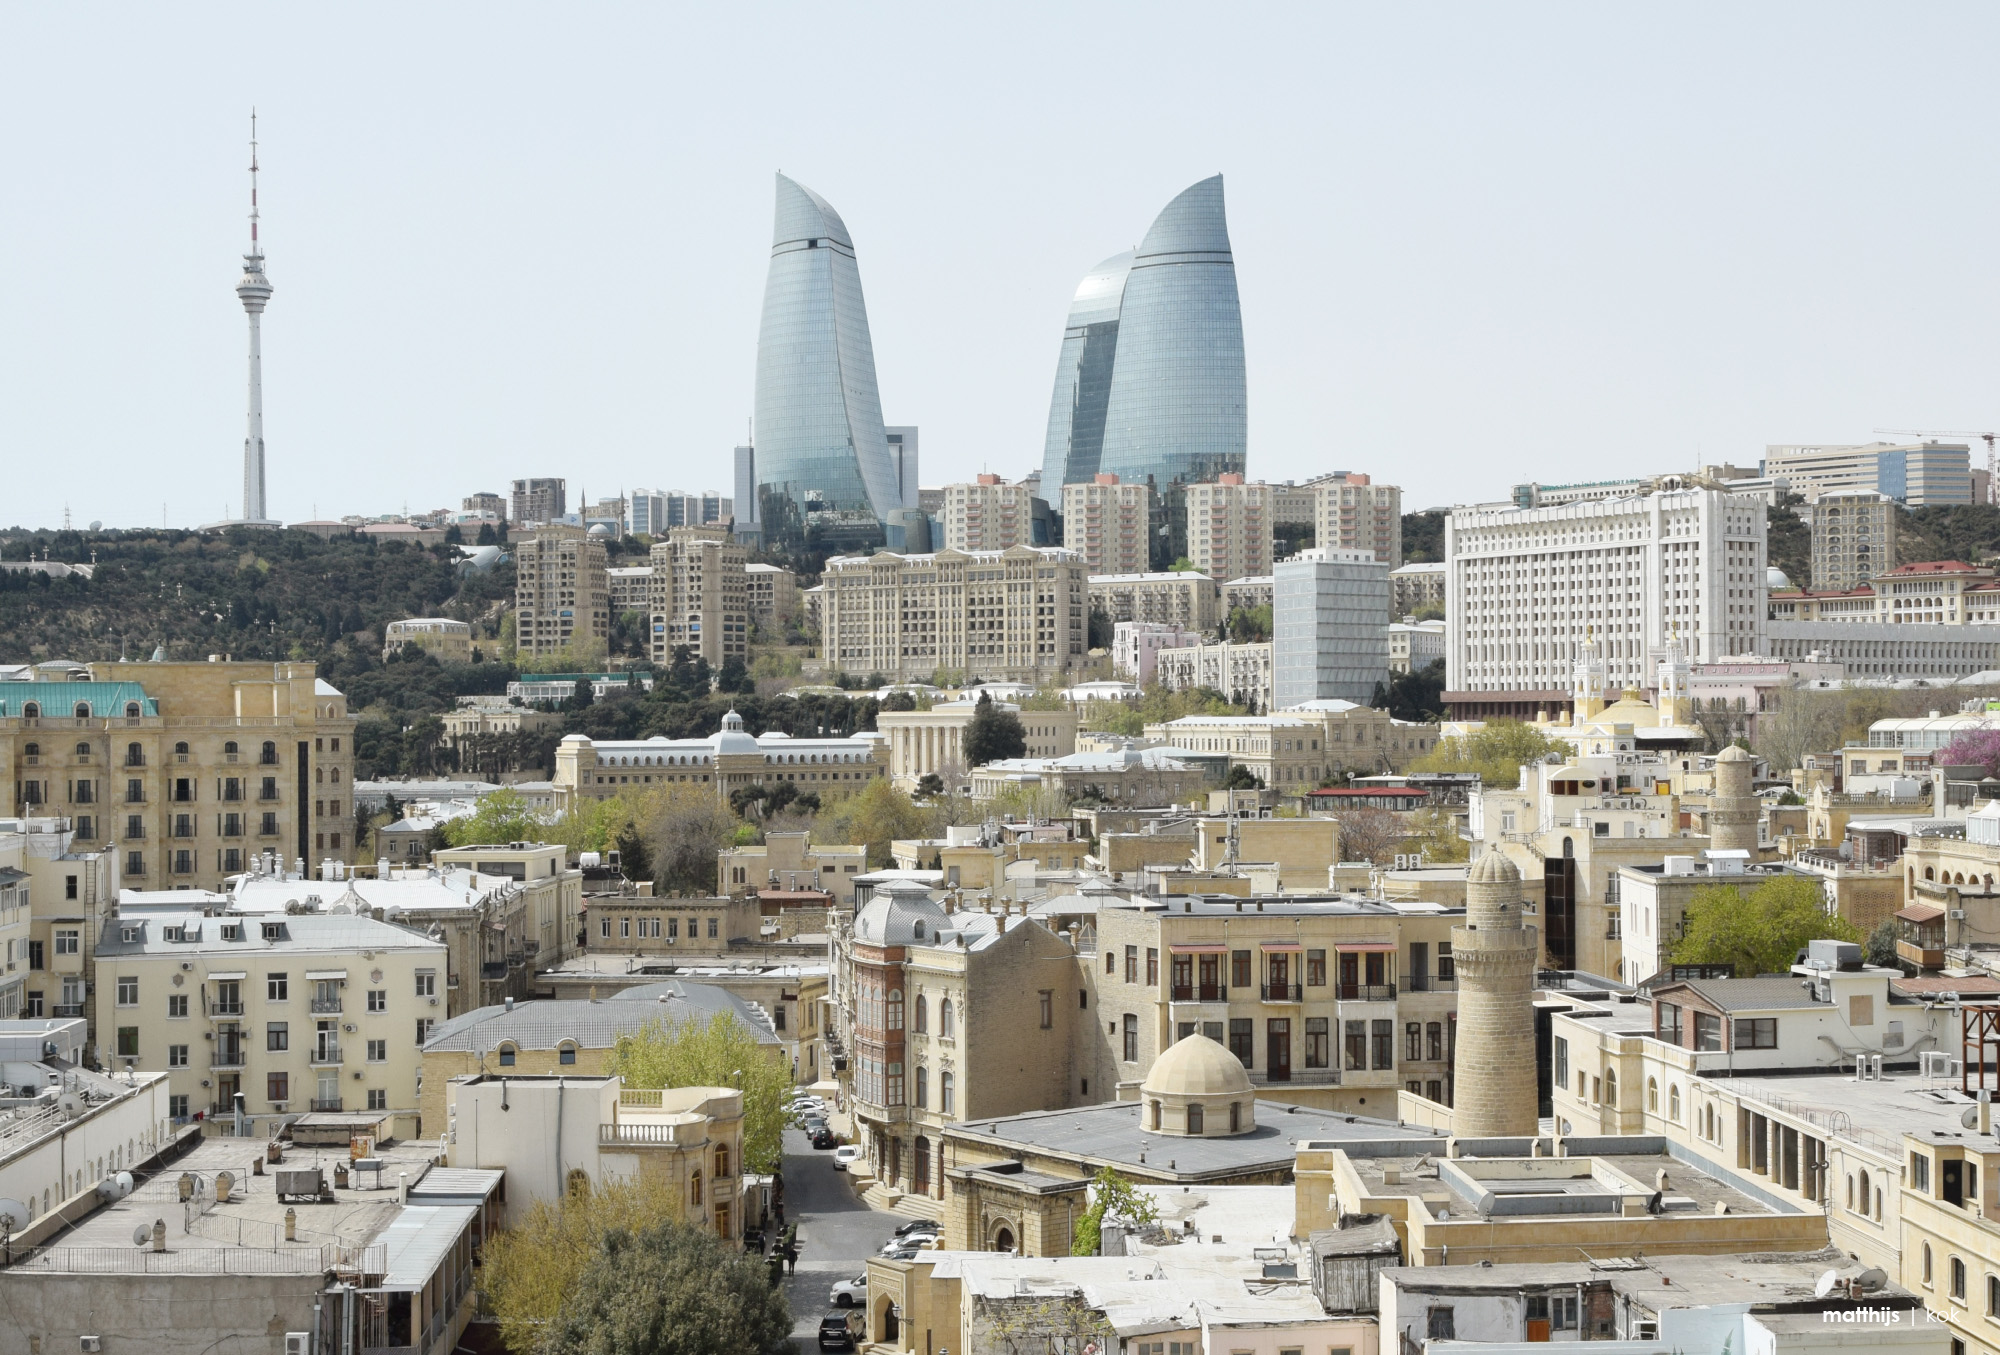 View from the Maidan Tower, Baku, Azerbaijan | Photo by Matthijs Kok